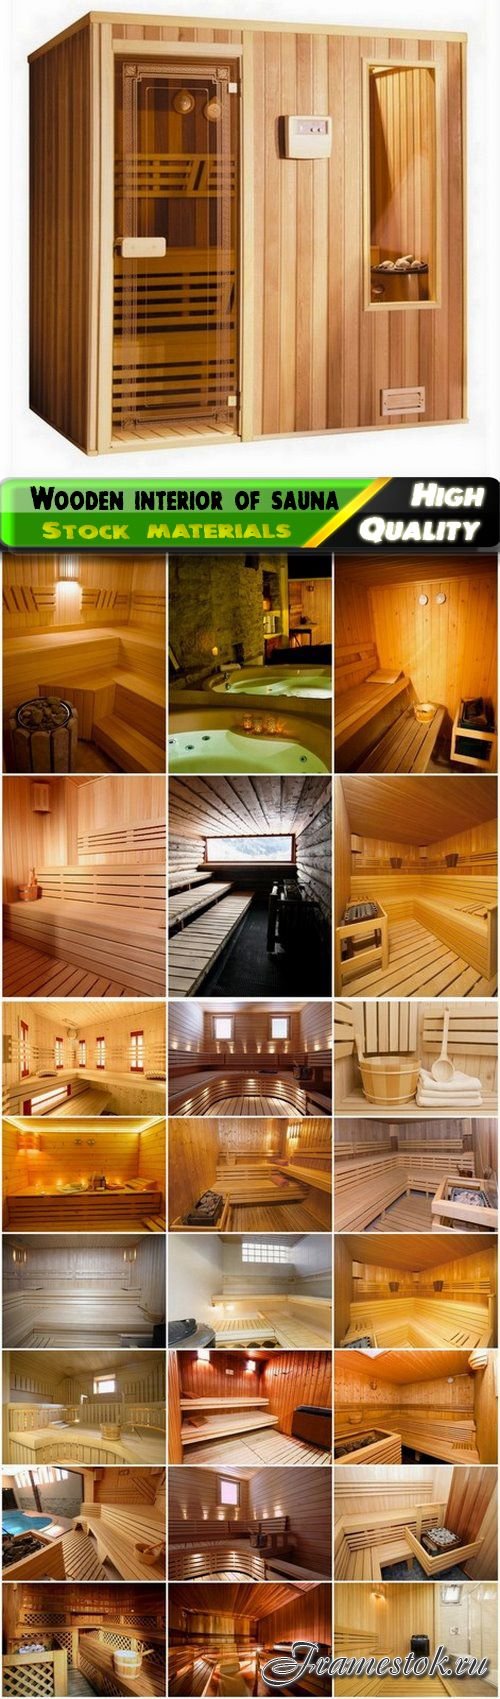 Wooden interior of sauna and bath - 25 HQ Jpg